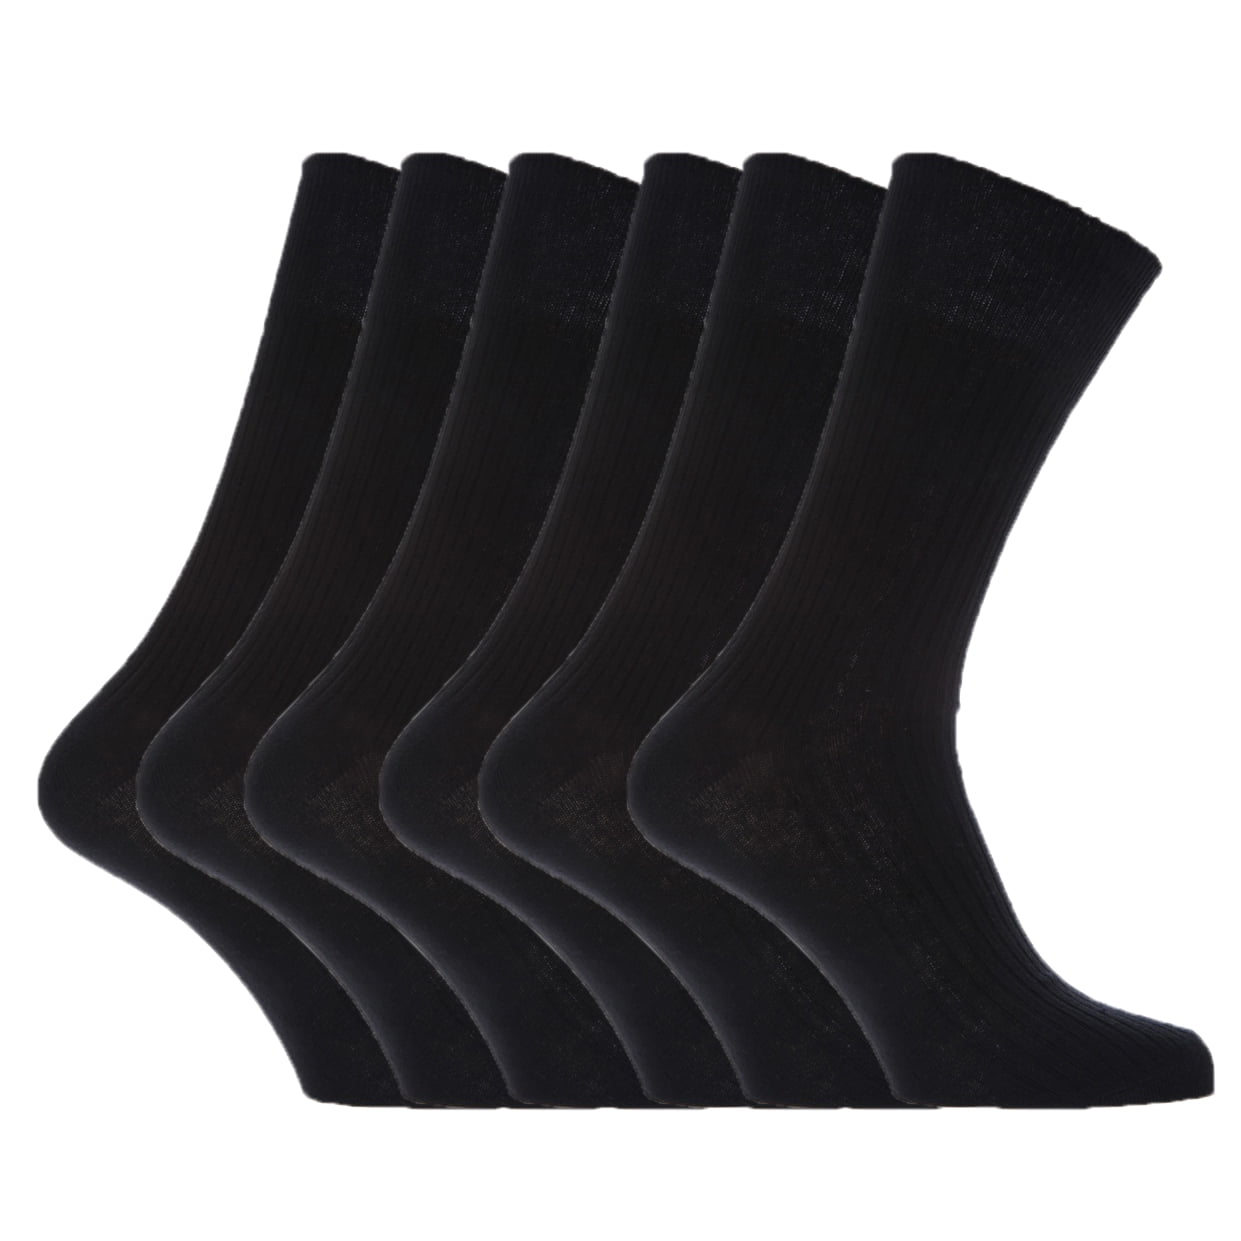 3,6,12,24 Pairs Mens Socks Diabetic Non Elastic Cotton Top Grip Comfot Pack 6-11 